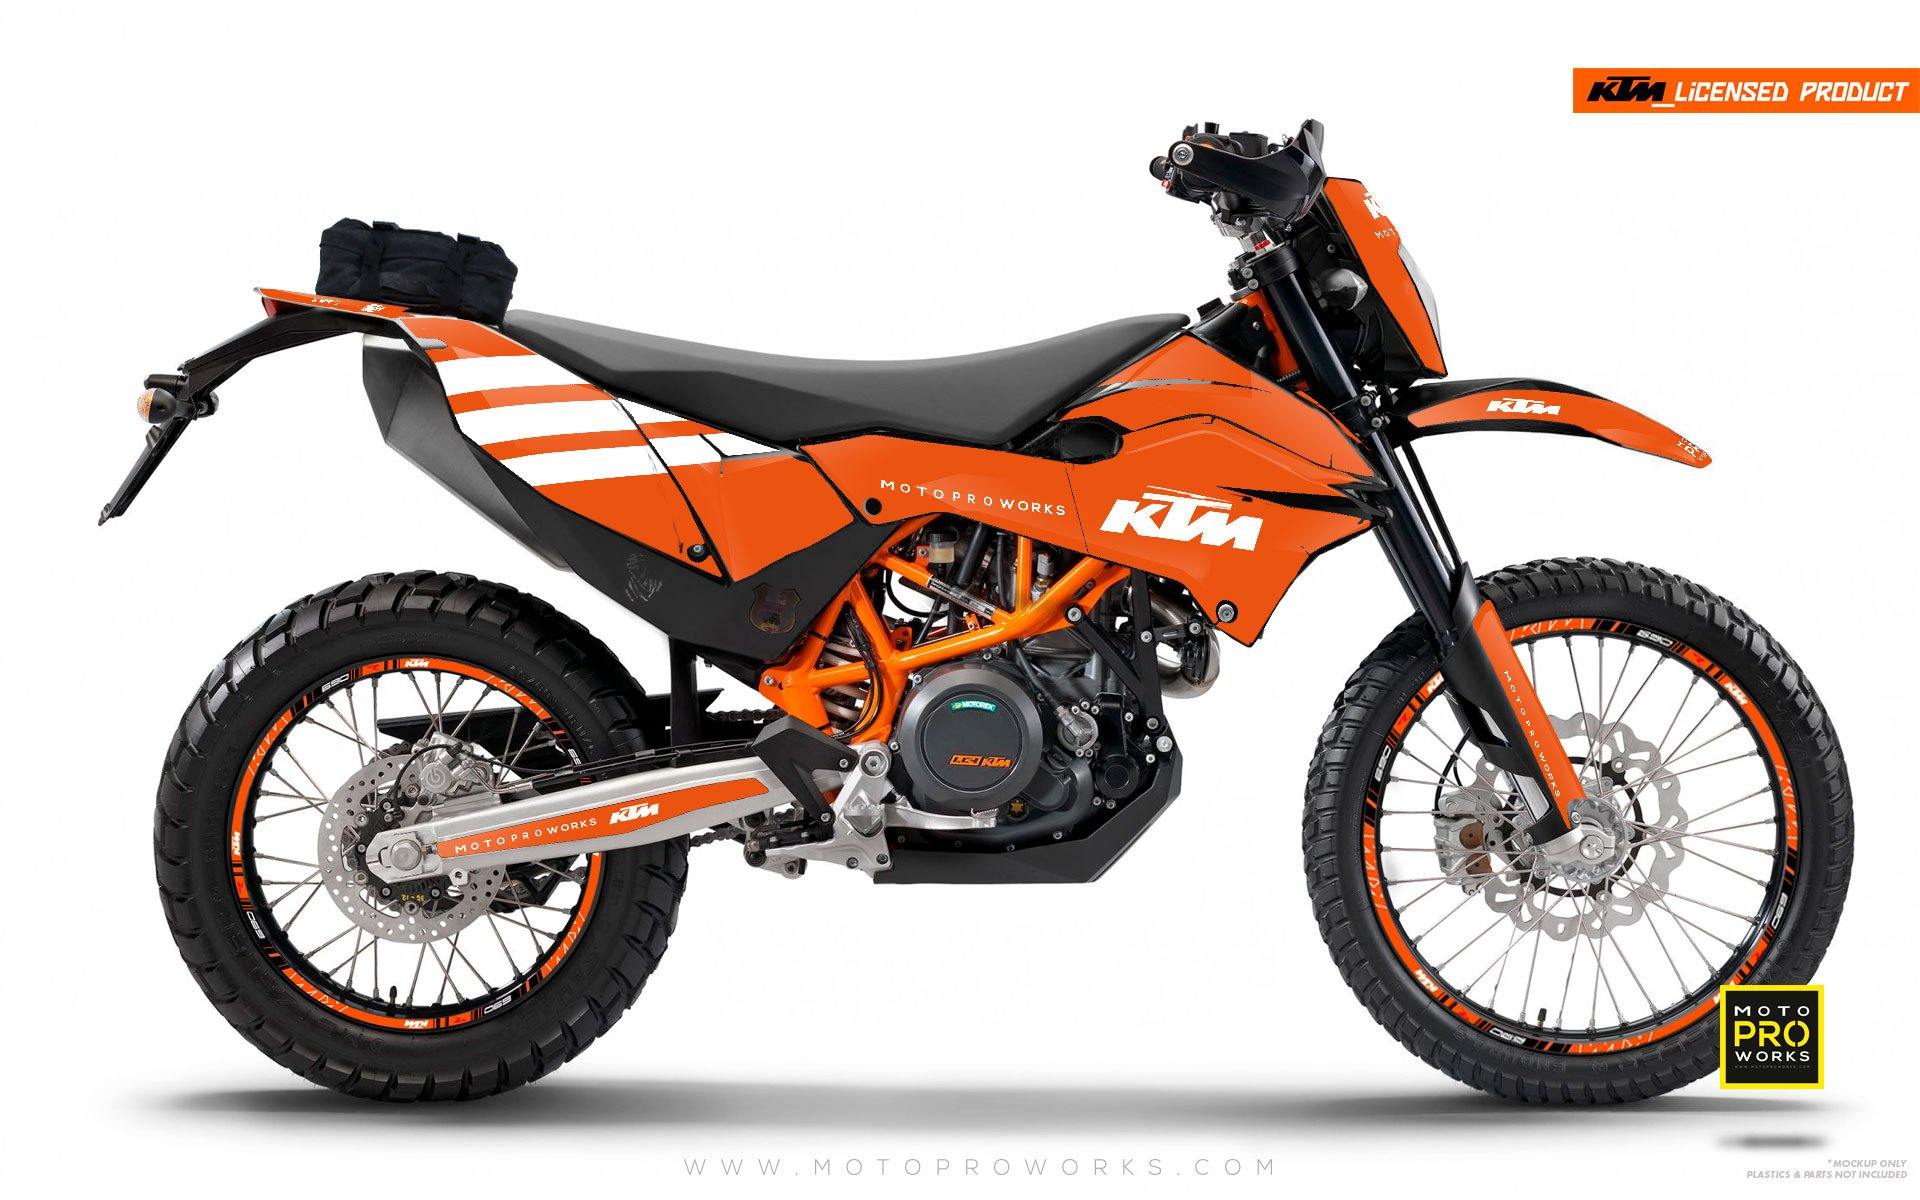 KTM GRAPHIC KIT - "FLAT ICON" (orange/white) - MotoProWorks | Decals and Bike Graphic kit